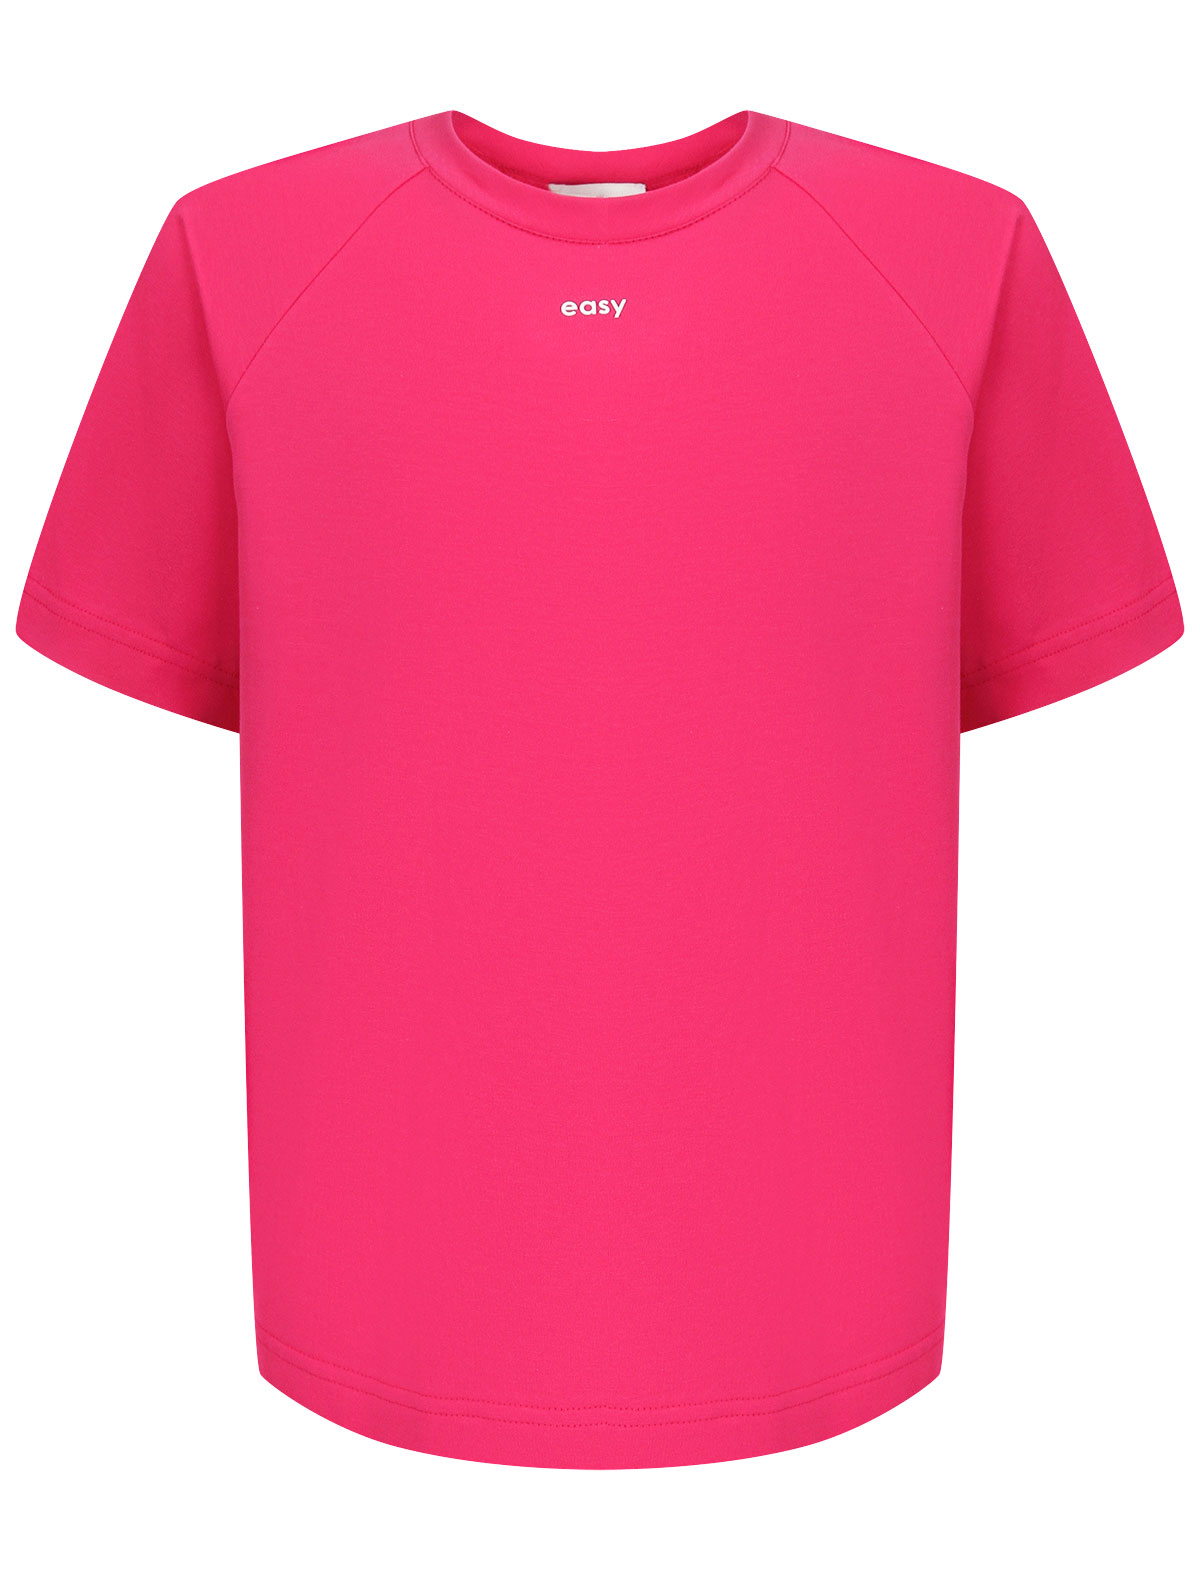 Футболка SILVER SPOON 2651012, цвет розовый, размер 7 1134529410411 - фото 1